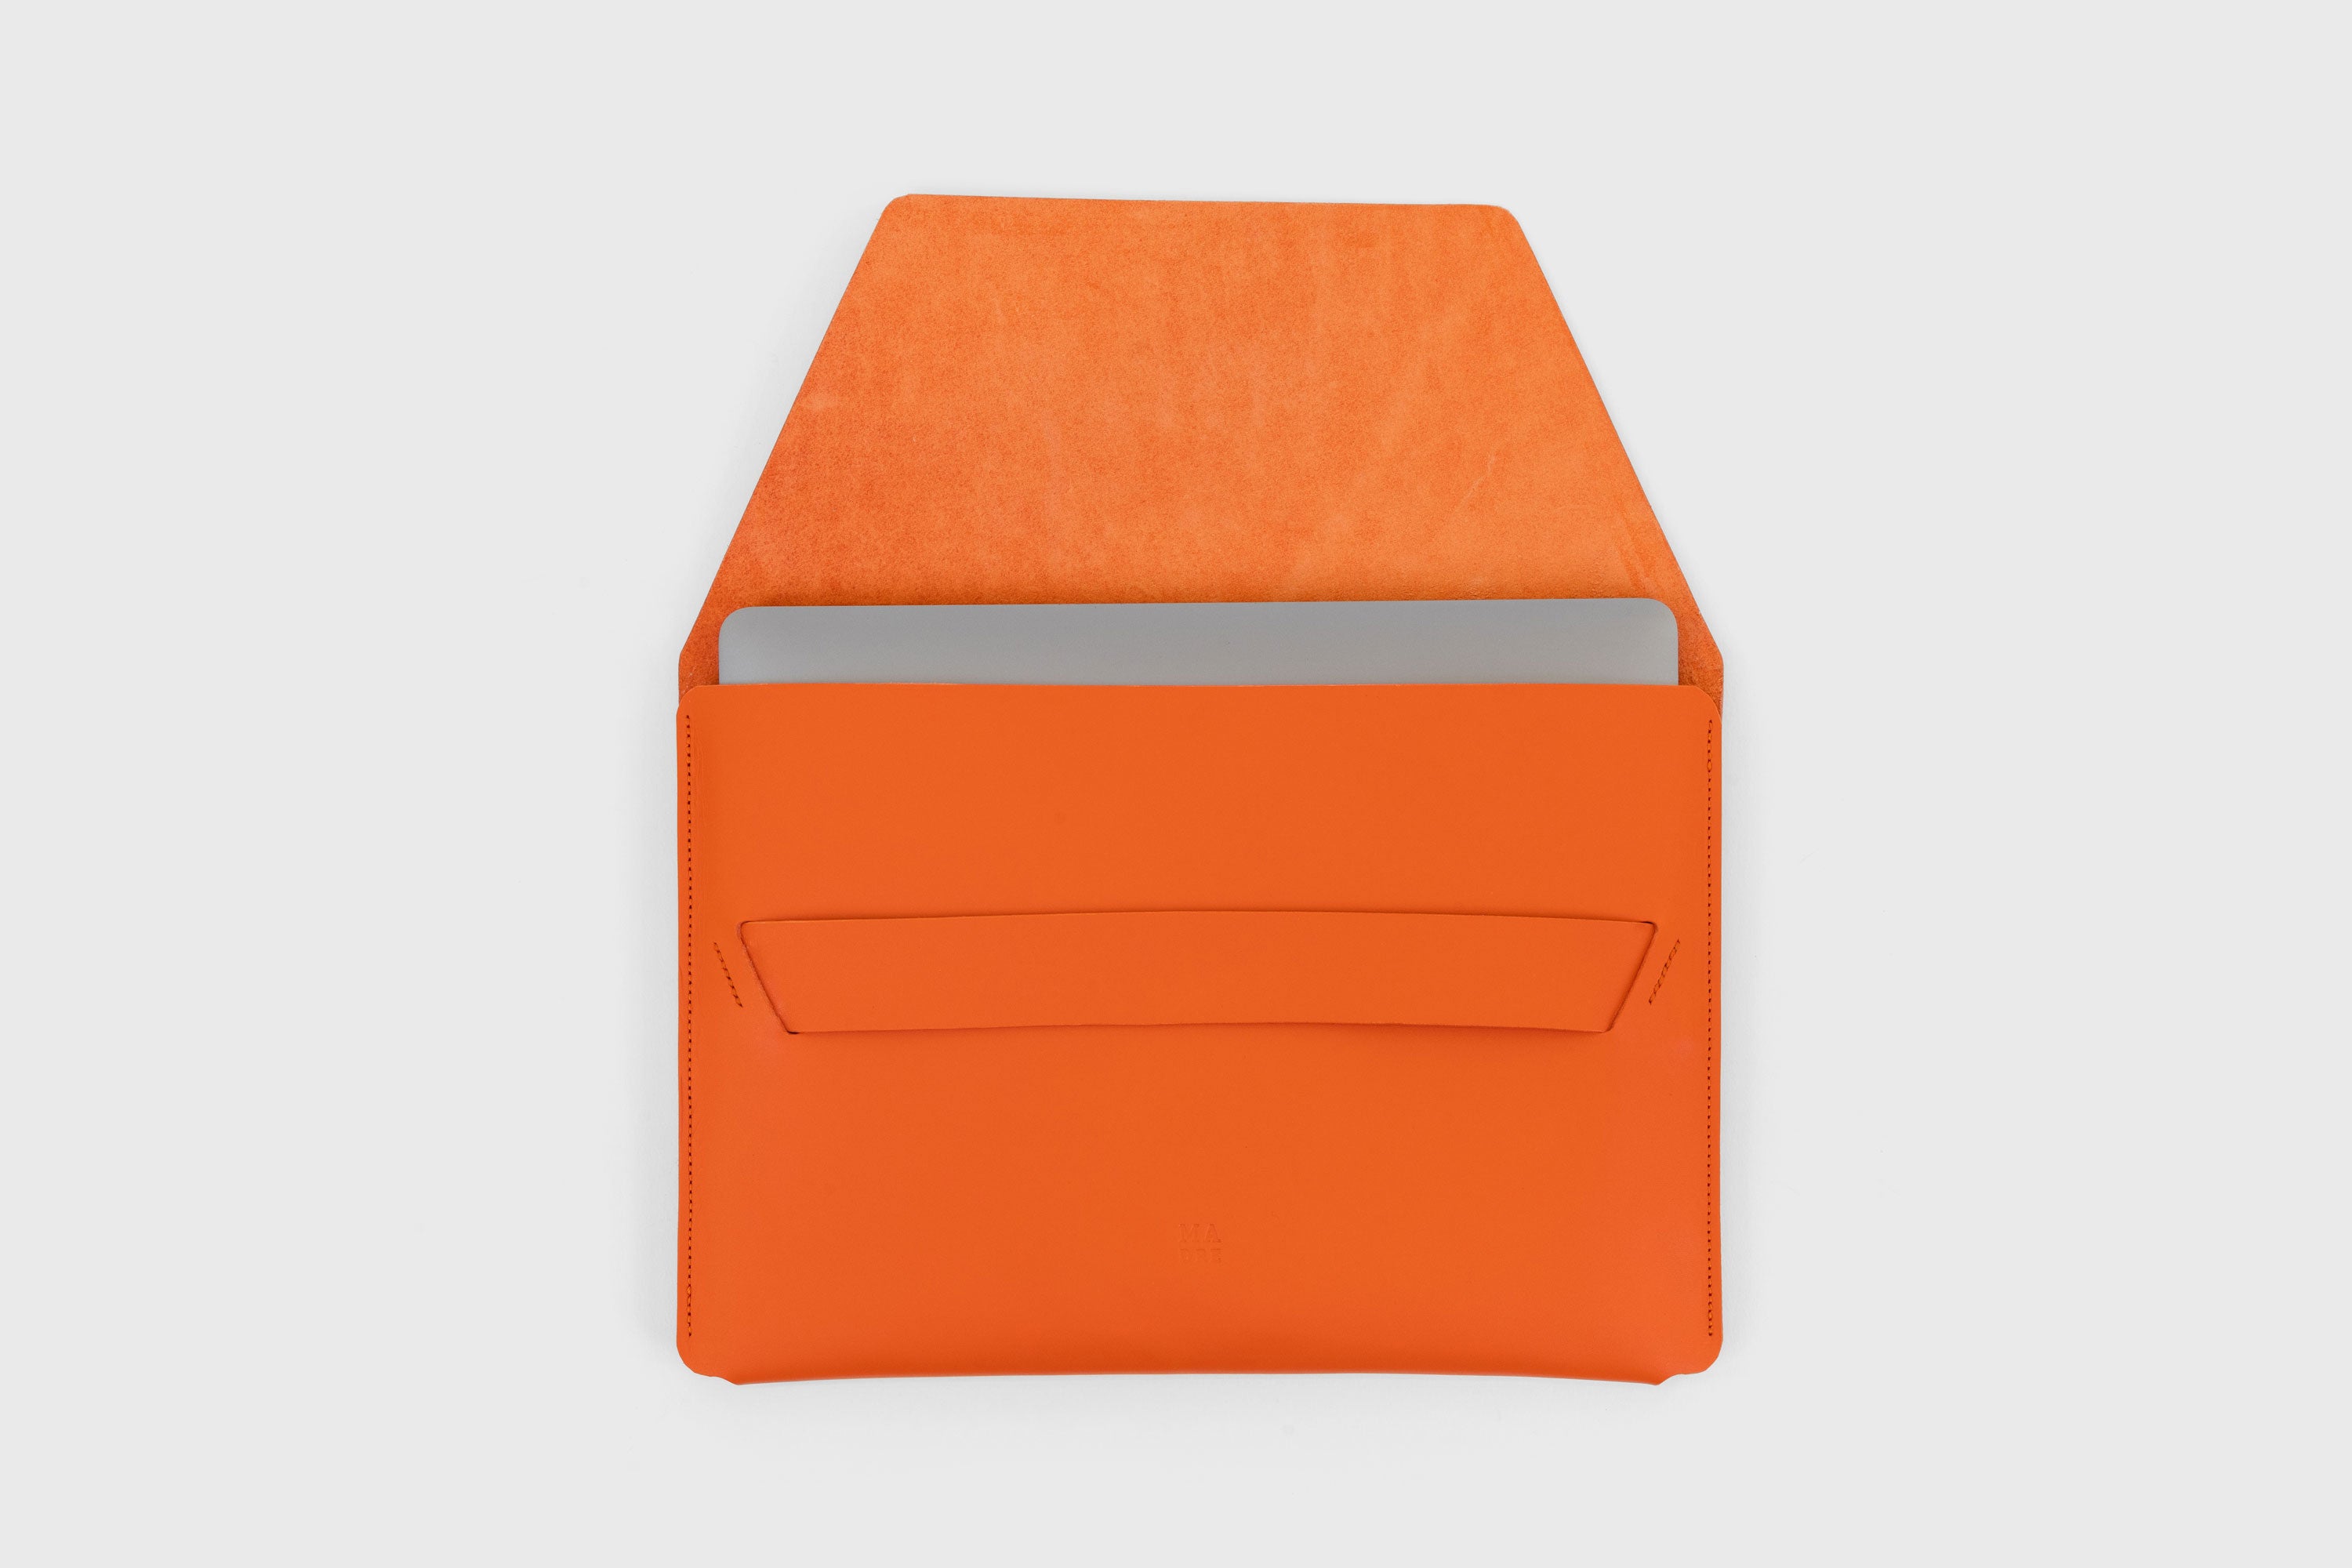 MacBook Pro 16 Inch Leather Sleeve Orange Vachetta Luxury Premium Case Vegetable Tanned Full Grain Real Leather Minimalist Designer Manuel Dreesman Atelier Madre Barcelona Spain